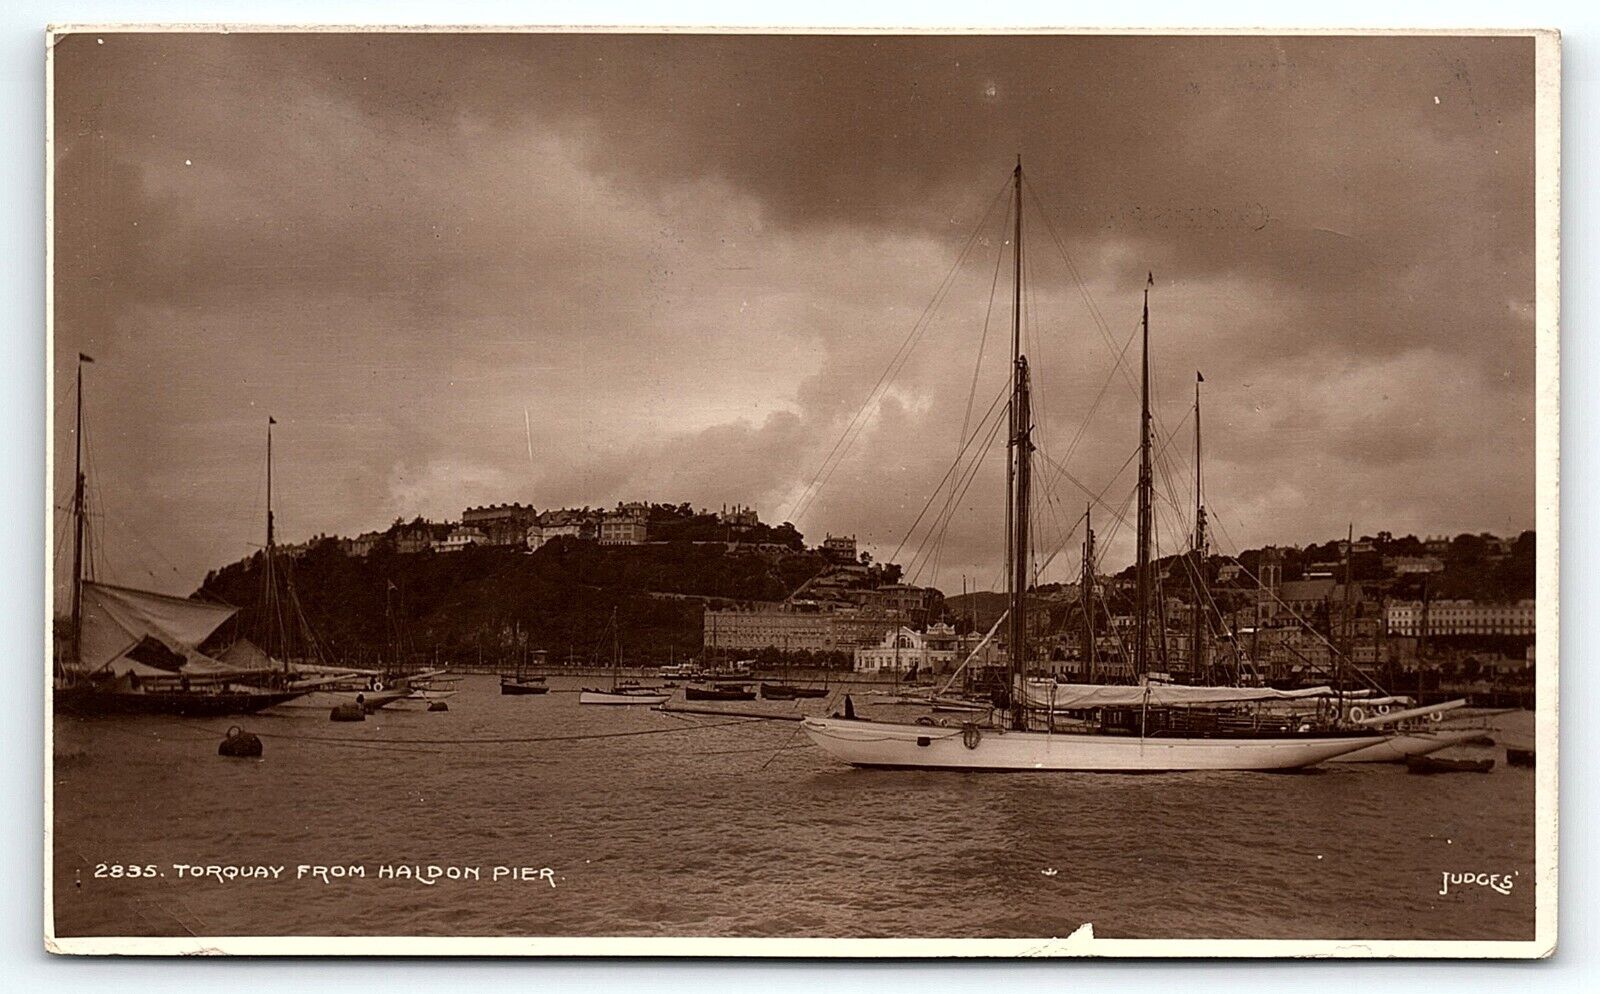 1930s TORQUAY ENGLAND FROM HALDON PIER SAILBOATS SHIPS PHOTO RPPC POSTCARD P1626